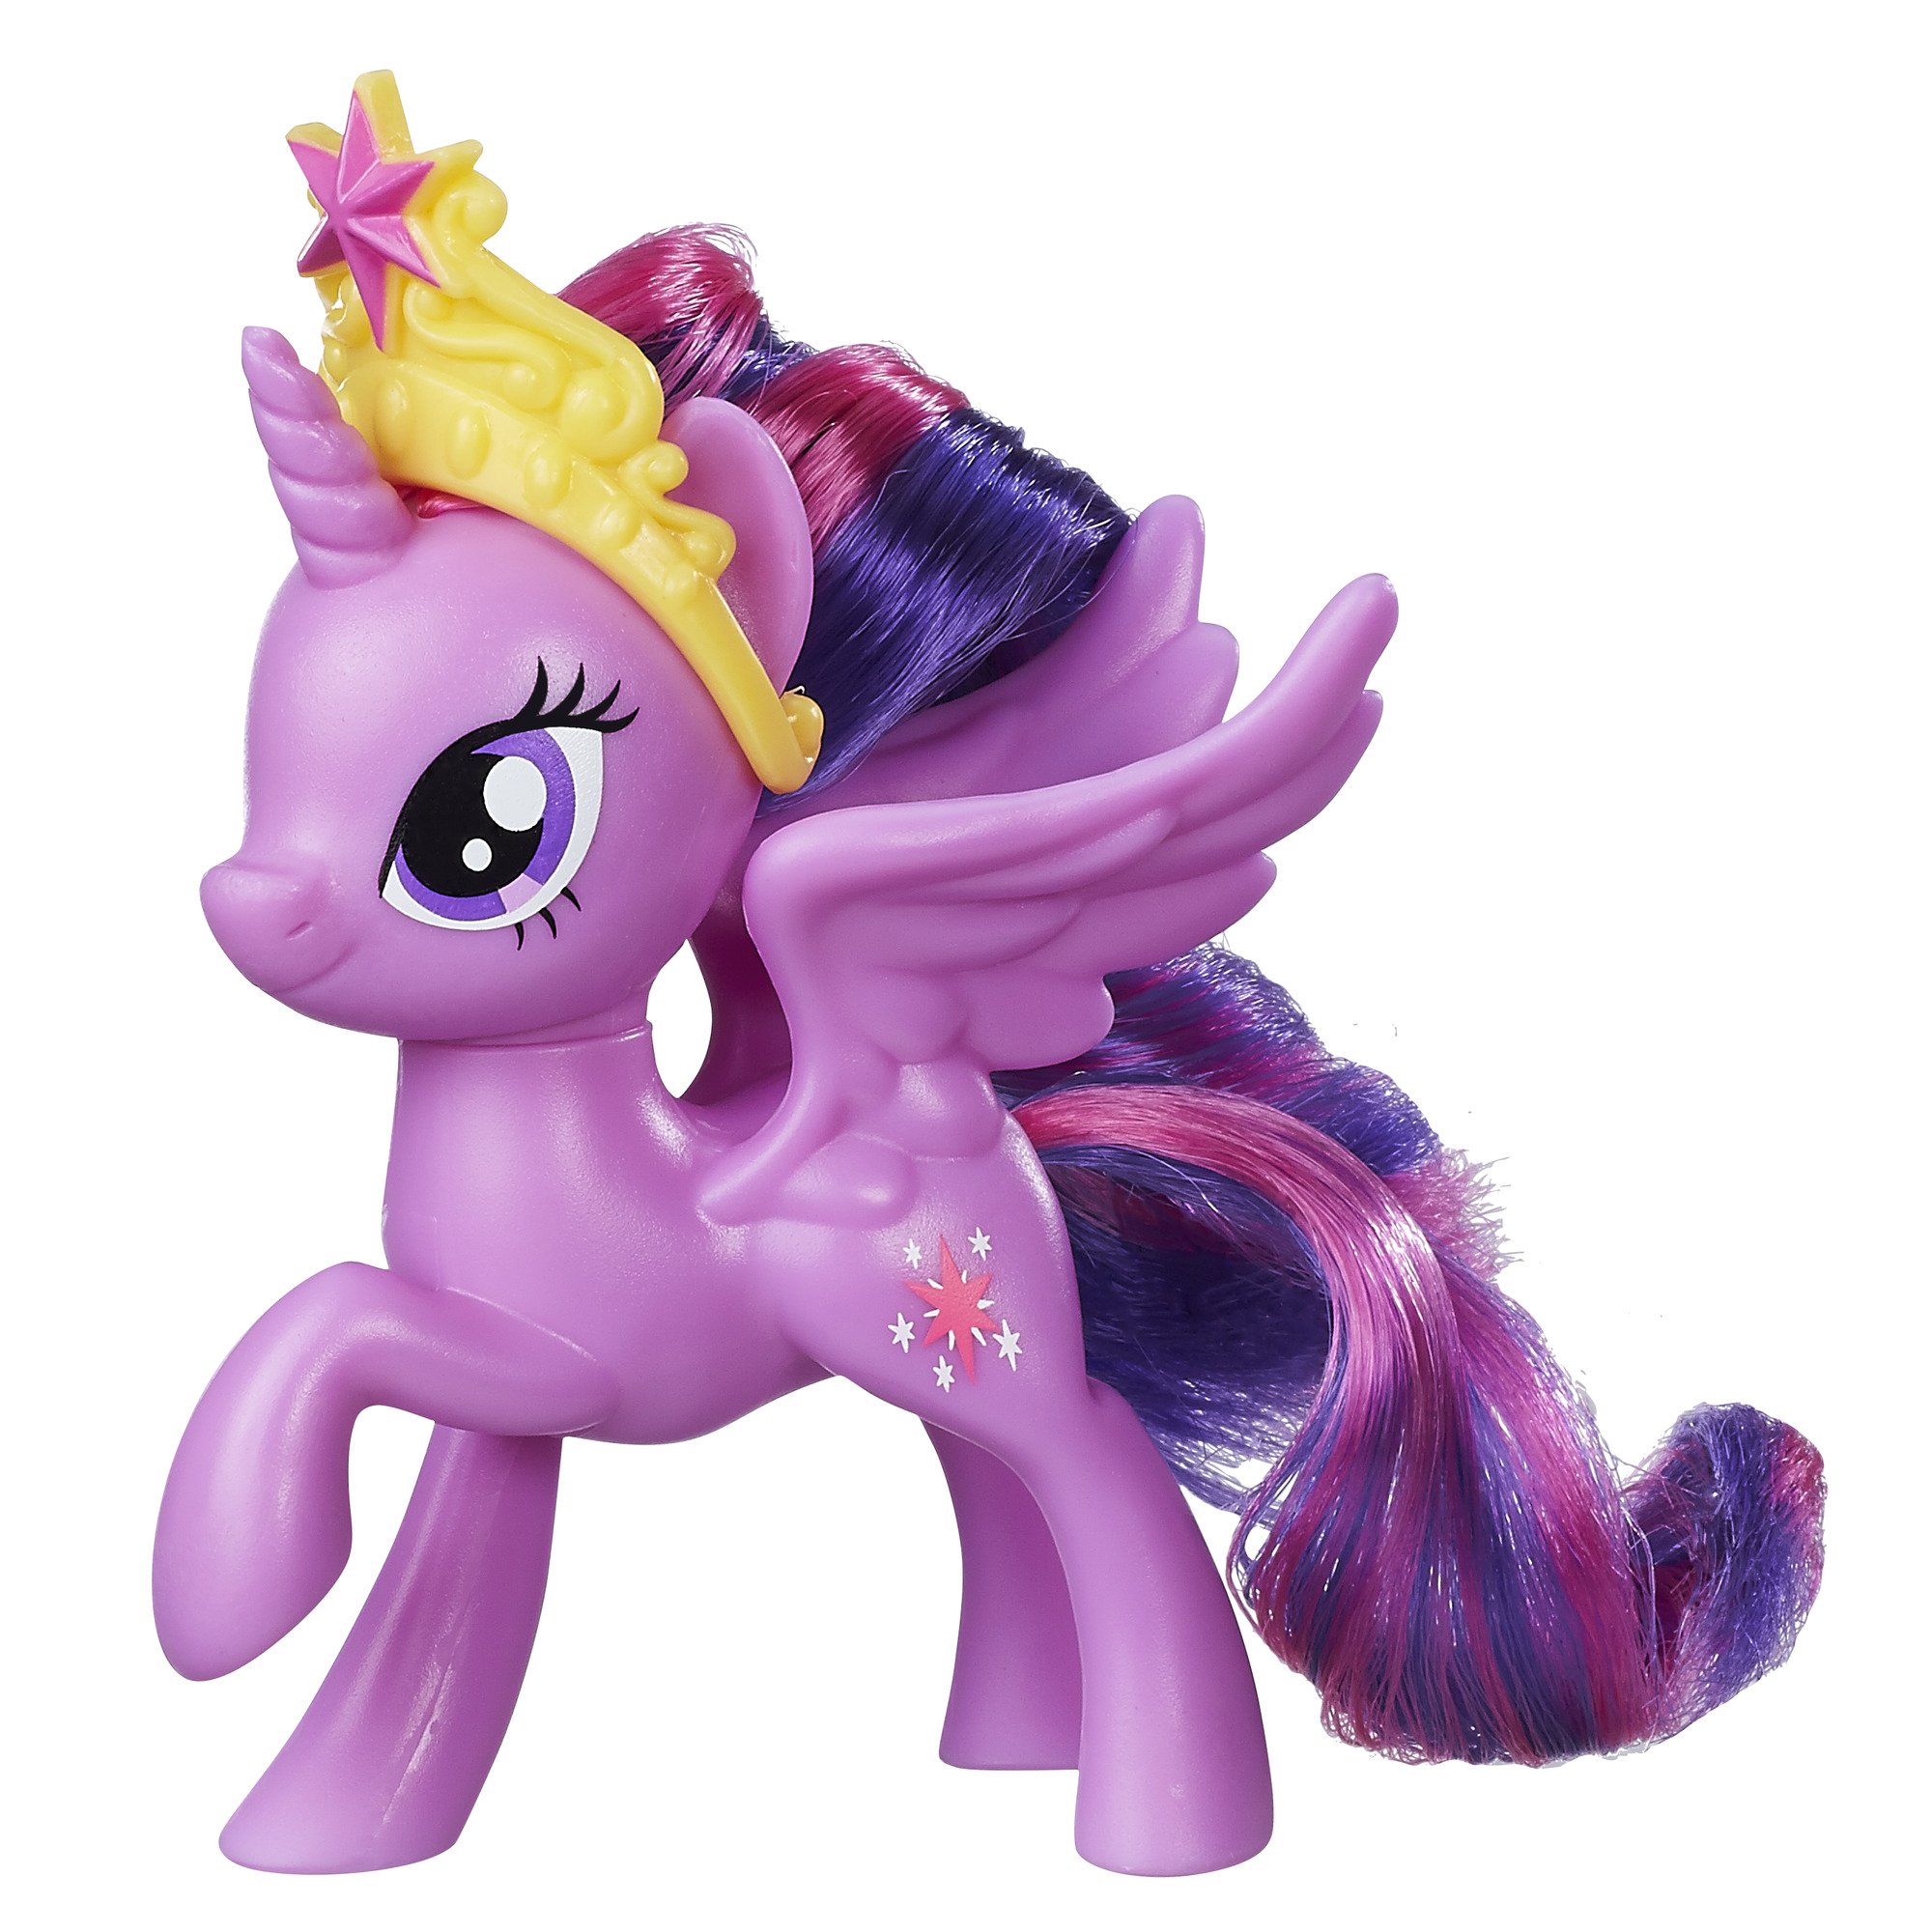 Share 69 kuva my little pony princess twilight sparkle figure